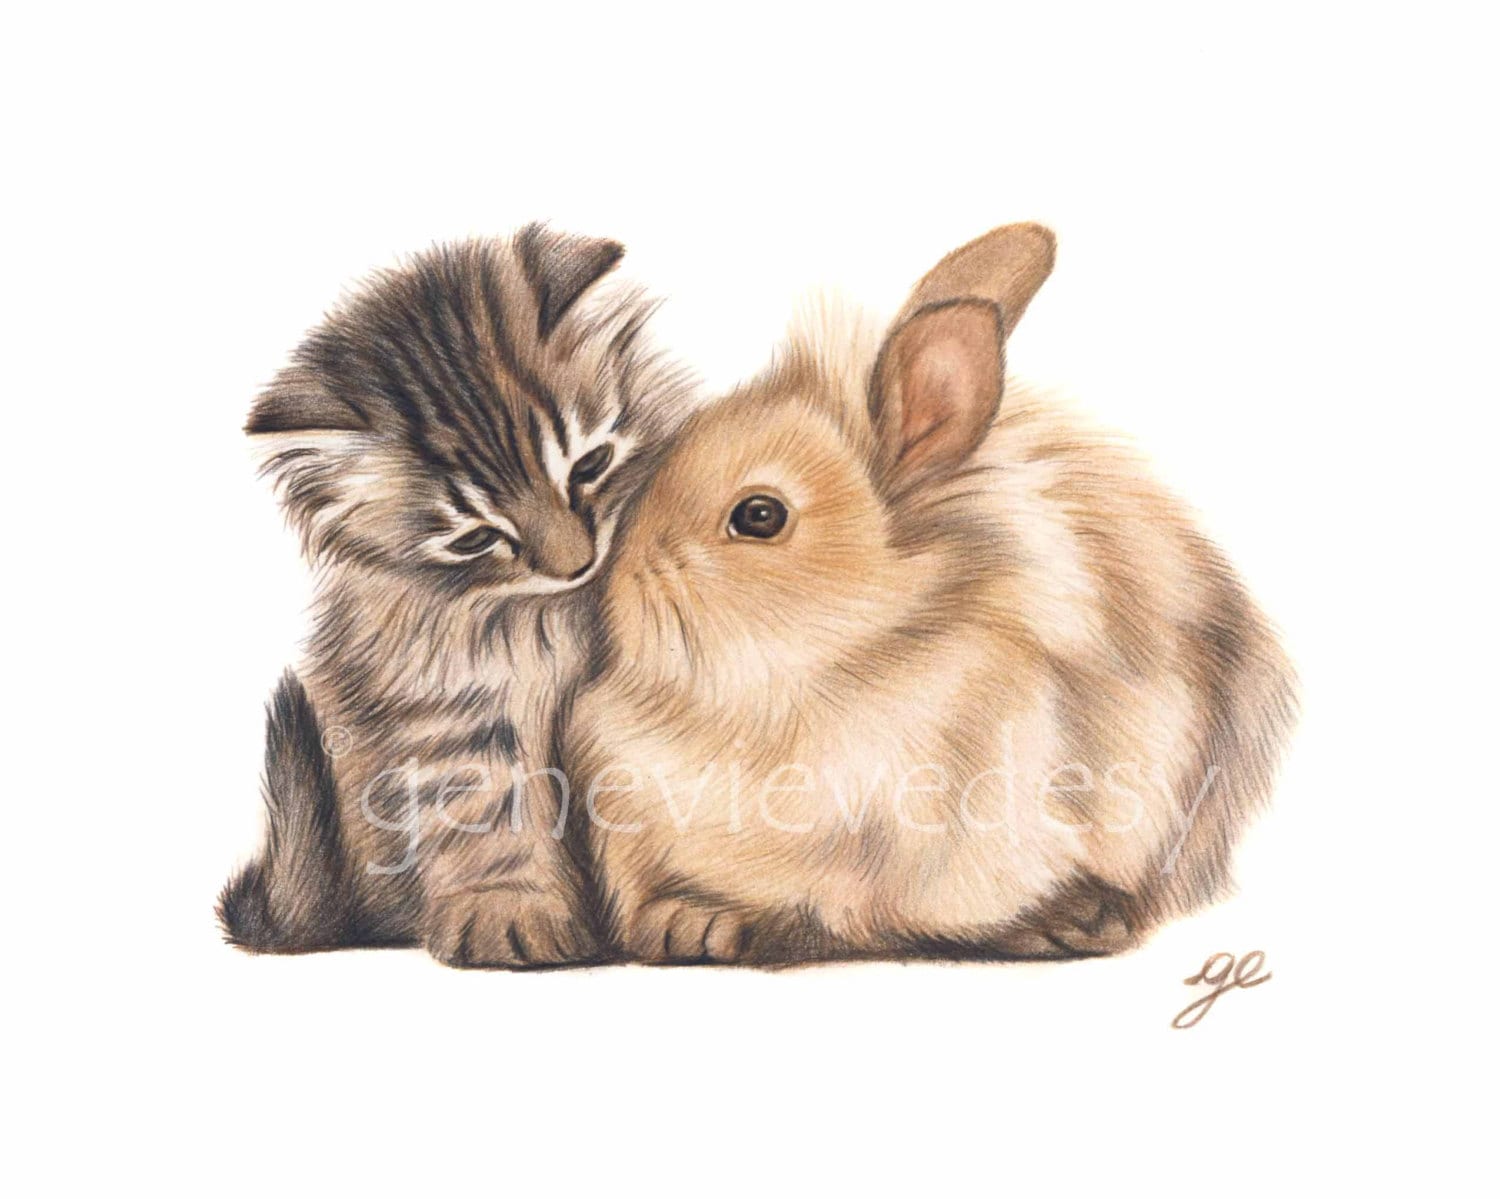 Cat and rabbit royalty free illustration in 2020 Cute cartoon, Rabbit